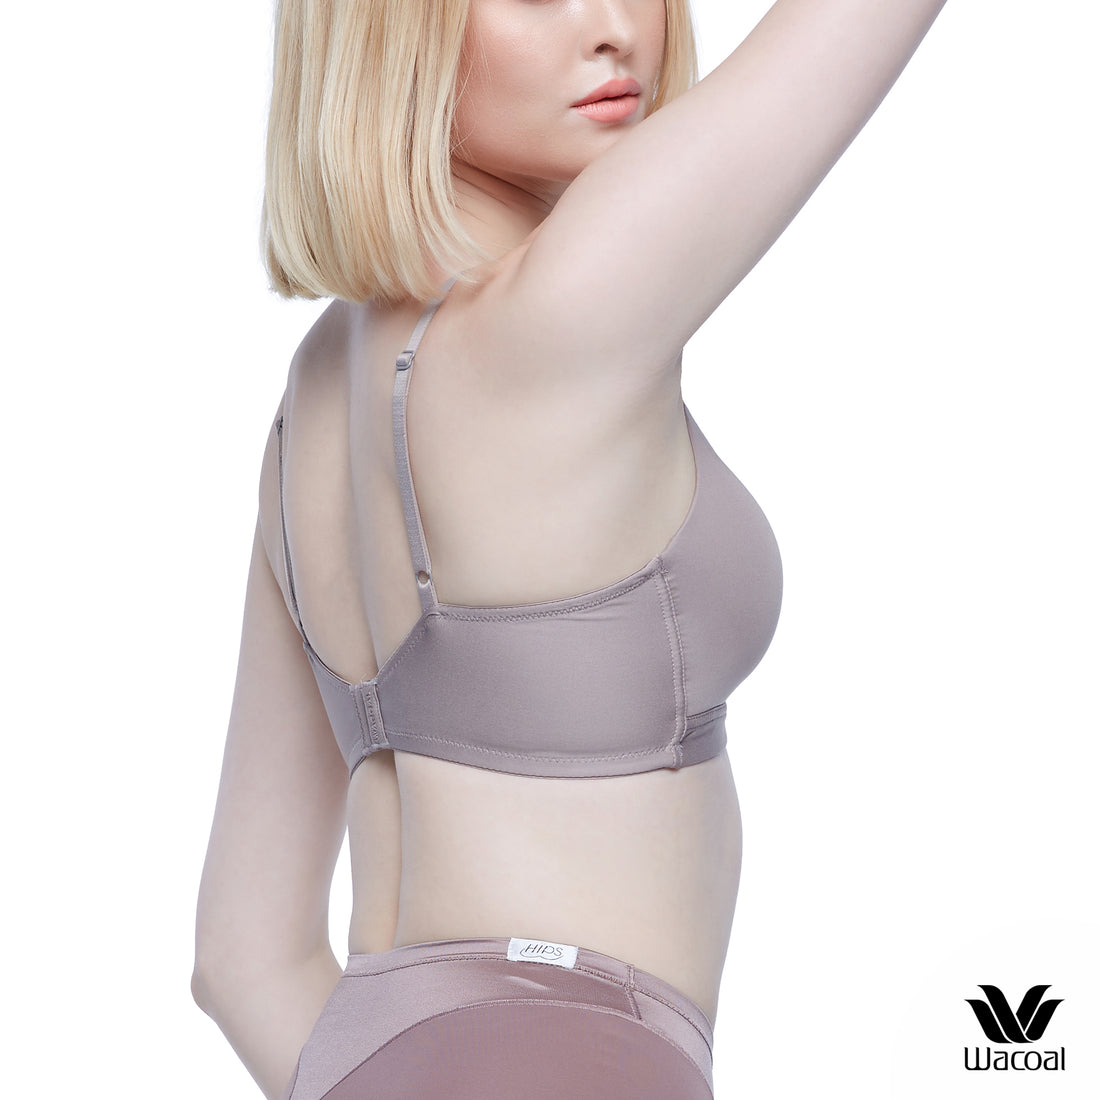 Wacoal Wireless Bra, wireless bra, comfortable to wear, model WB5X52, ovaltine color (OT)